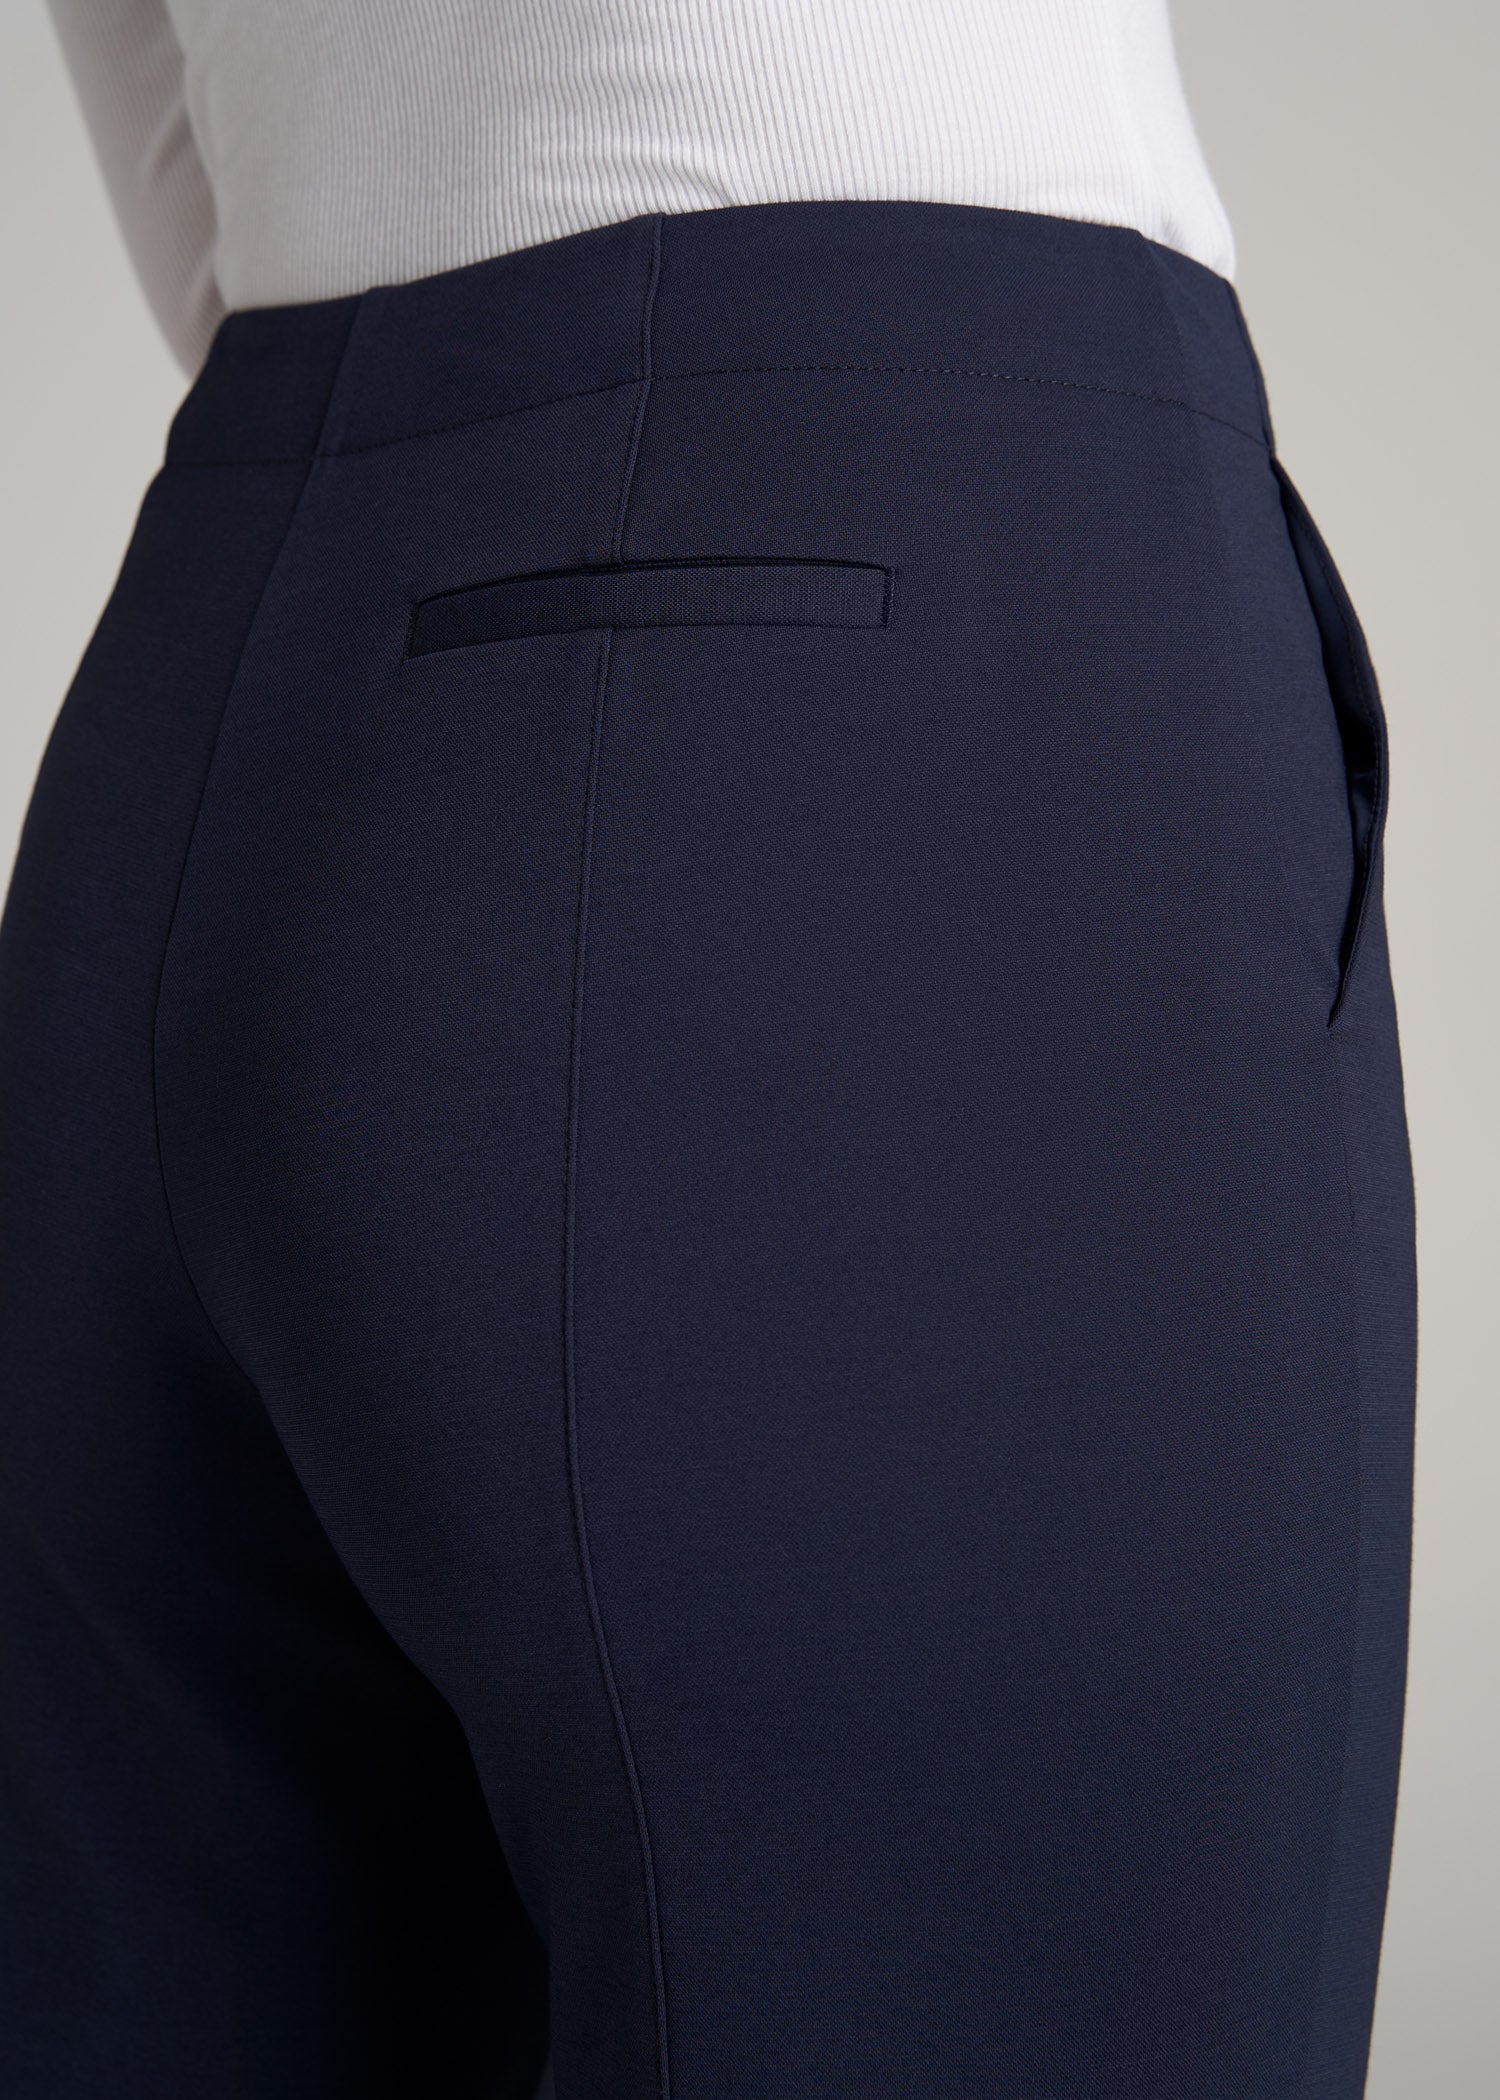  Womens Navy Blue Dress Pants